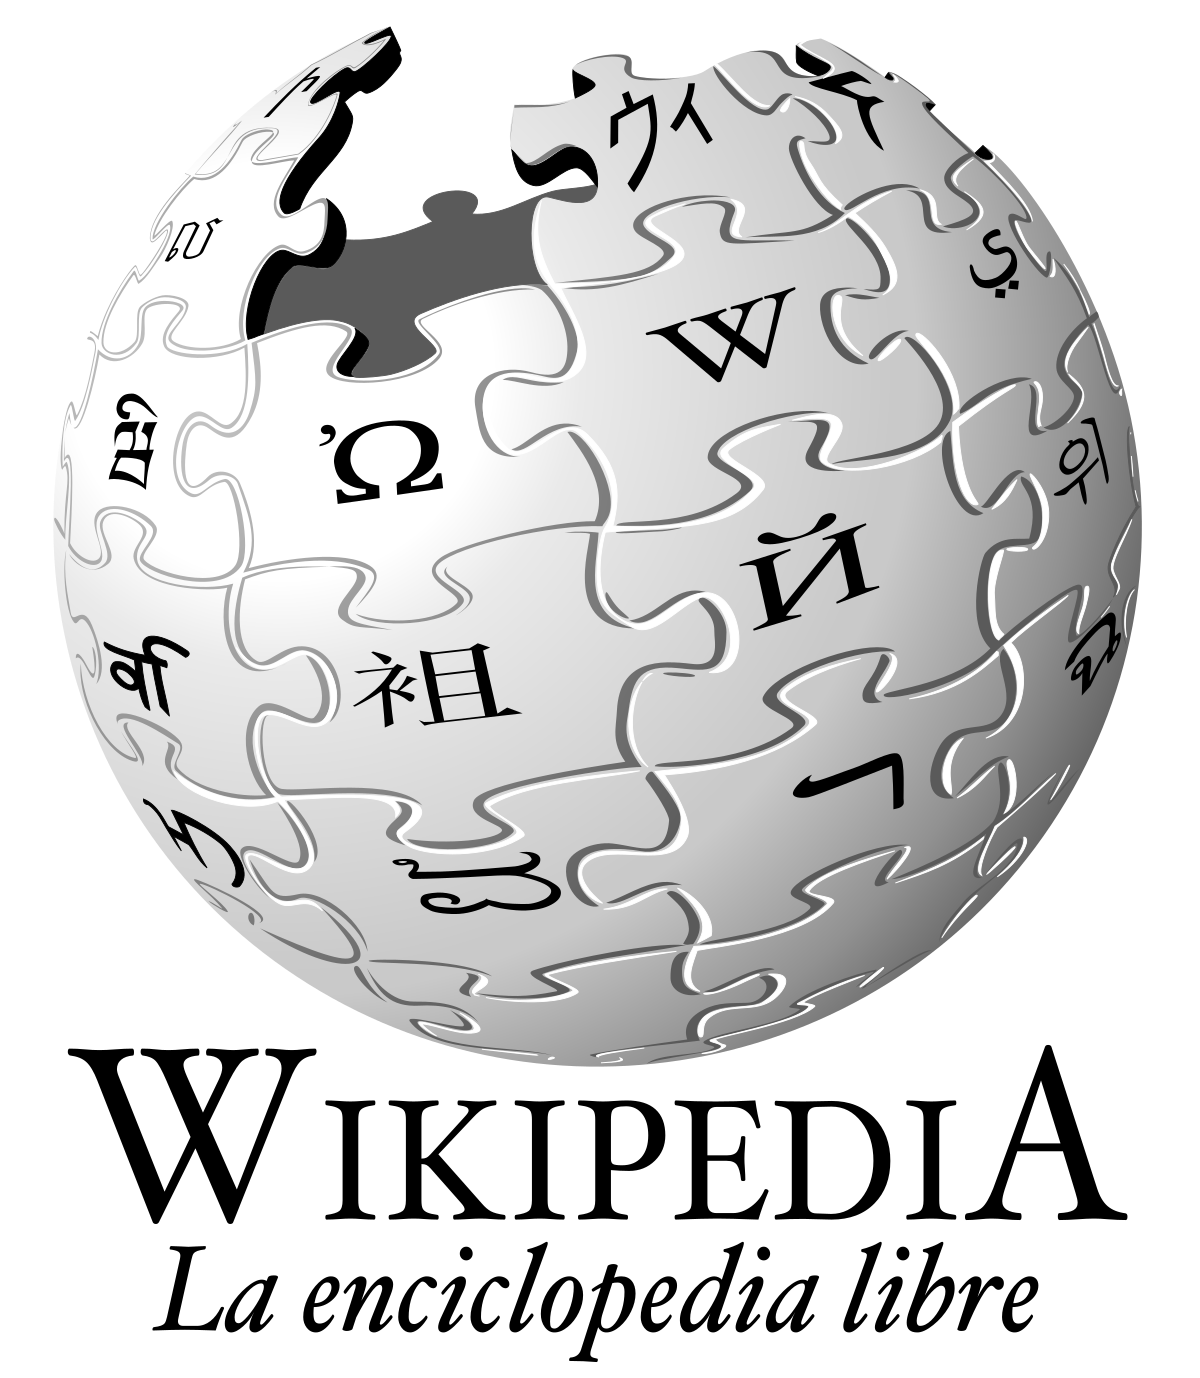 1 ru wikipedia org wiki. Википедия картинки. Википедия логотип. Значок Википедии. Ремипедия.